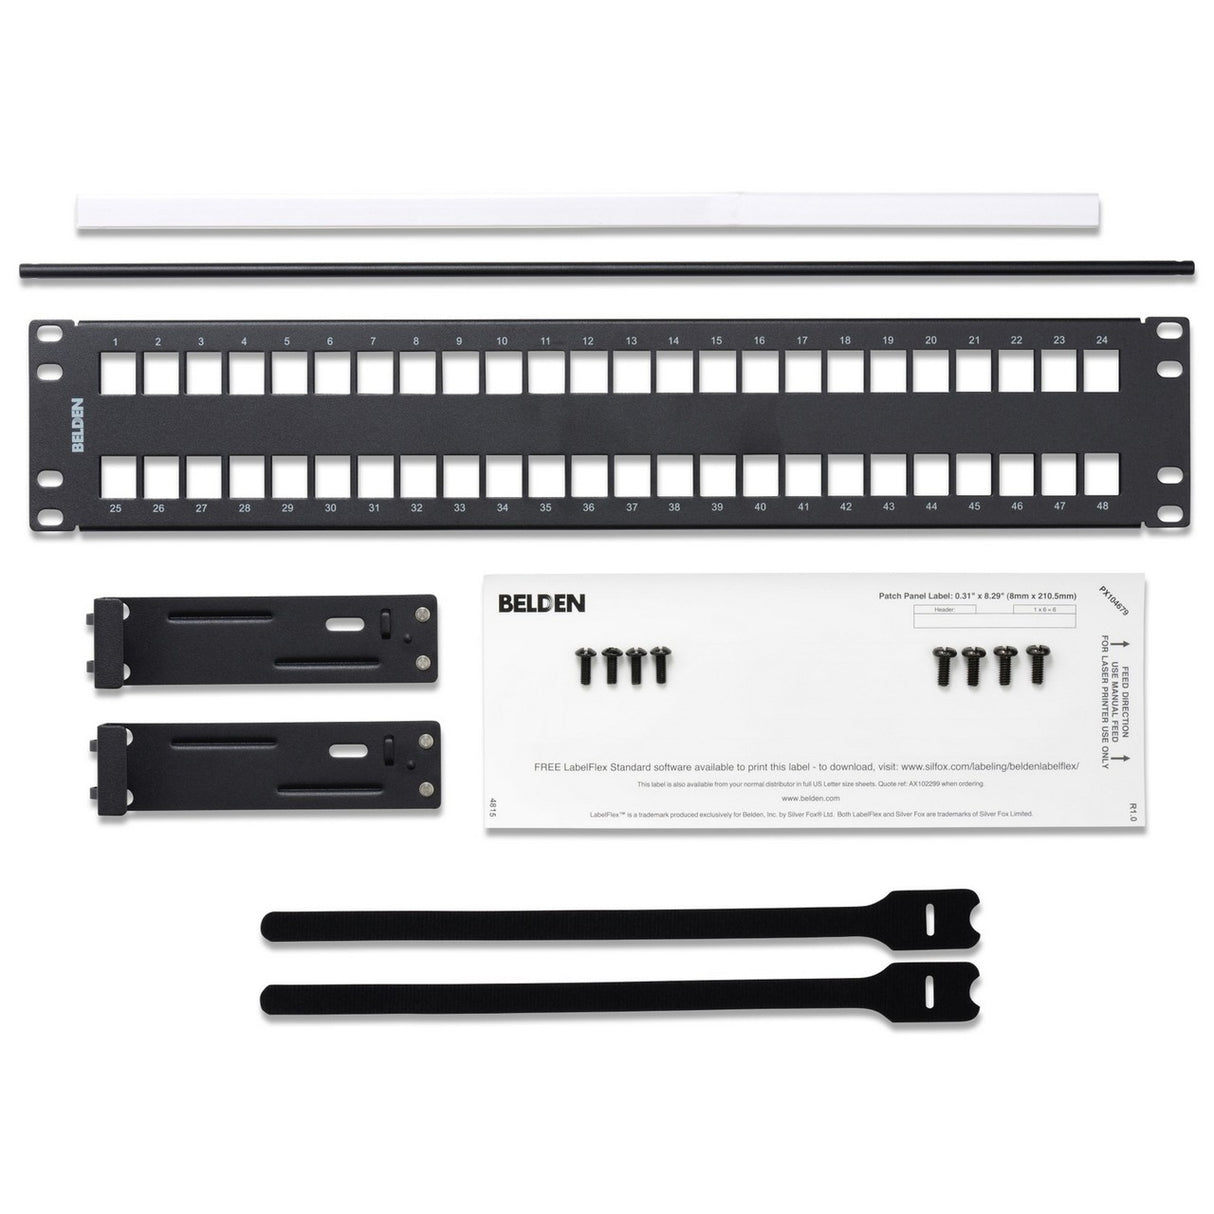 Belden AX103115 | 48 Port 2RU KeyConnect Modular Blank Patch Panel Black